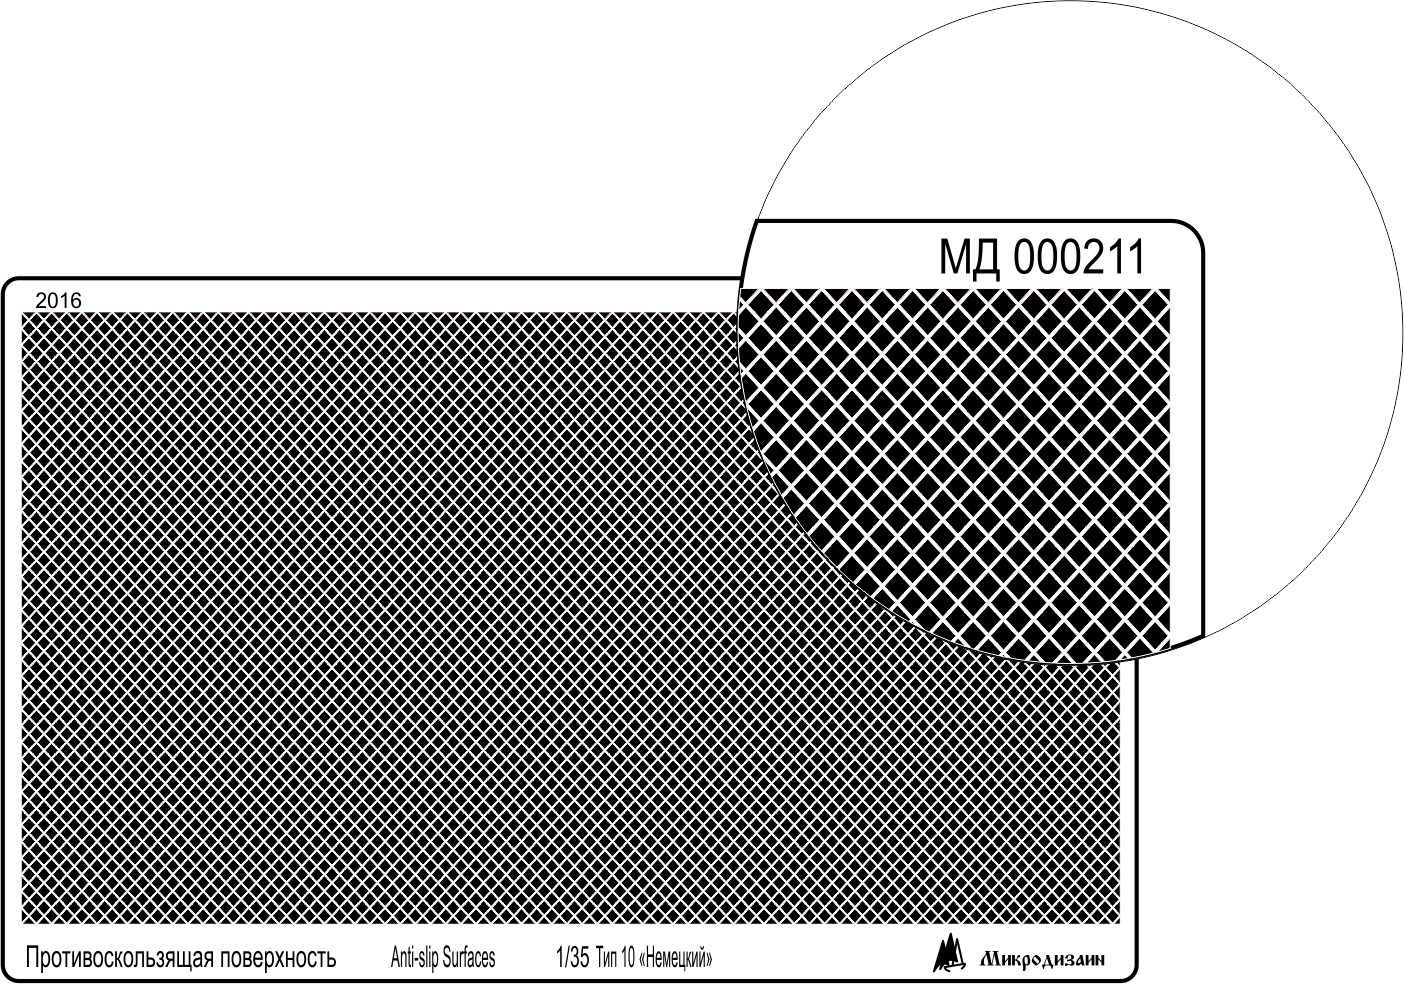 МД 000211  фототравление  Профнастил (95х55 мм) тип 10, ромб внутренний, немецкий